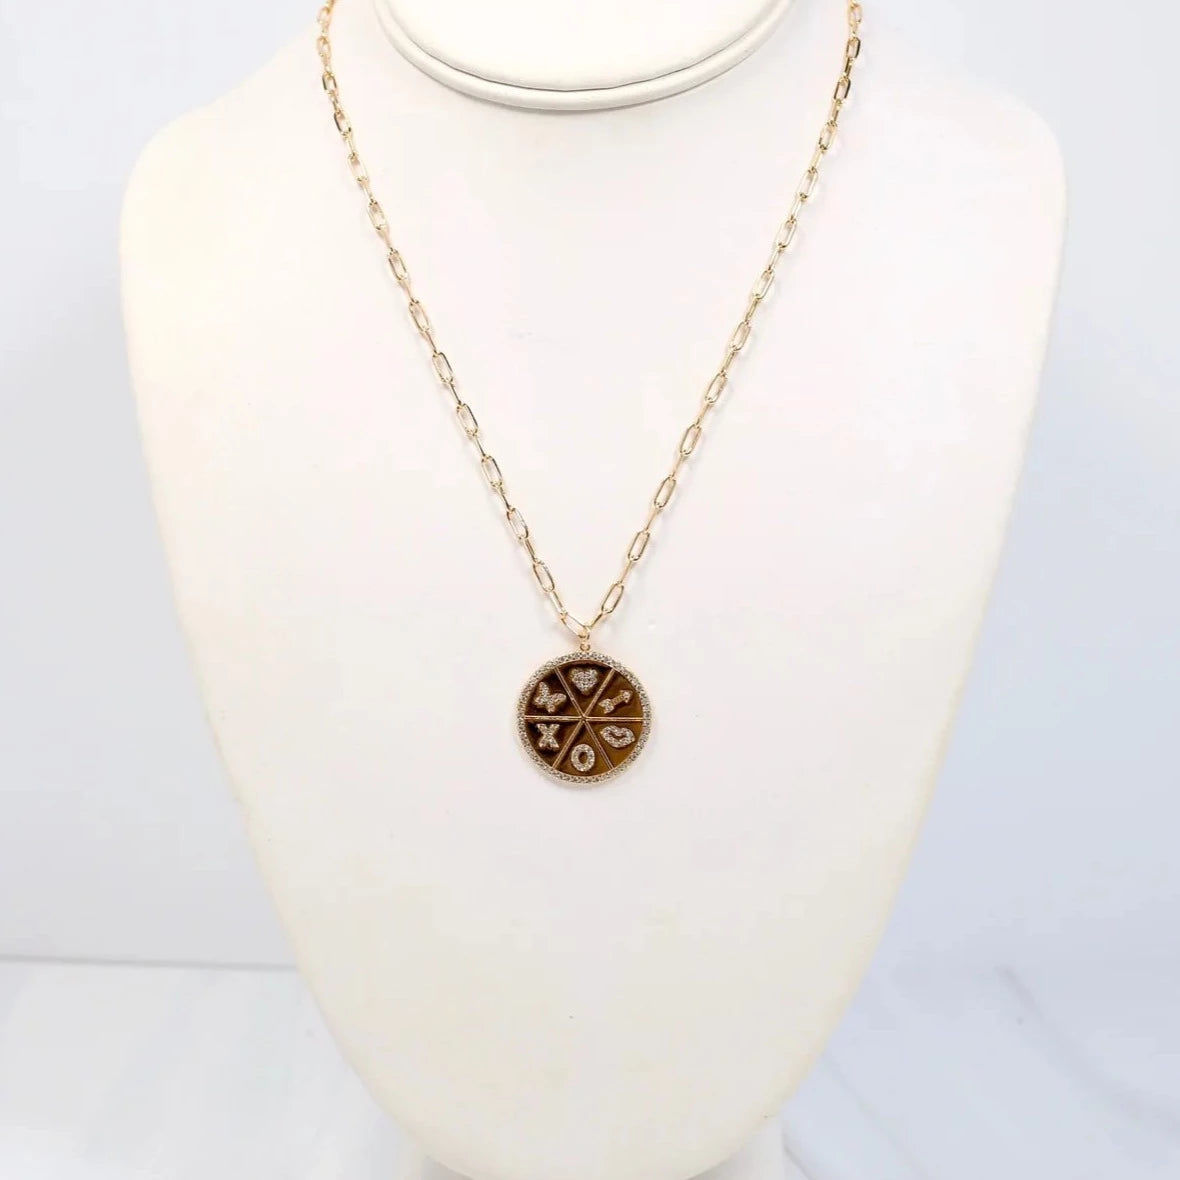 Winneway Charm Necklace Gold-Necklaces-Caroline Hill-LouisGeorge Boutique, Women’s Fashion Boutique Located in Trussville, Alabama